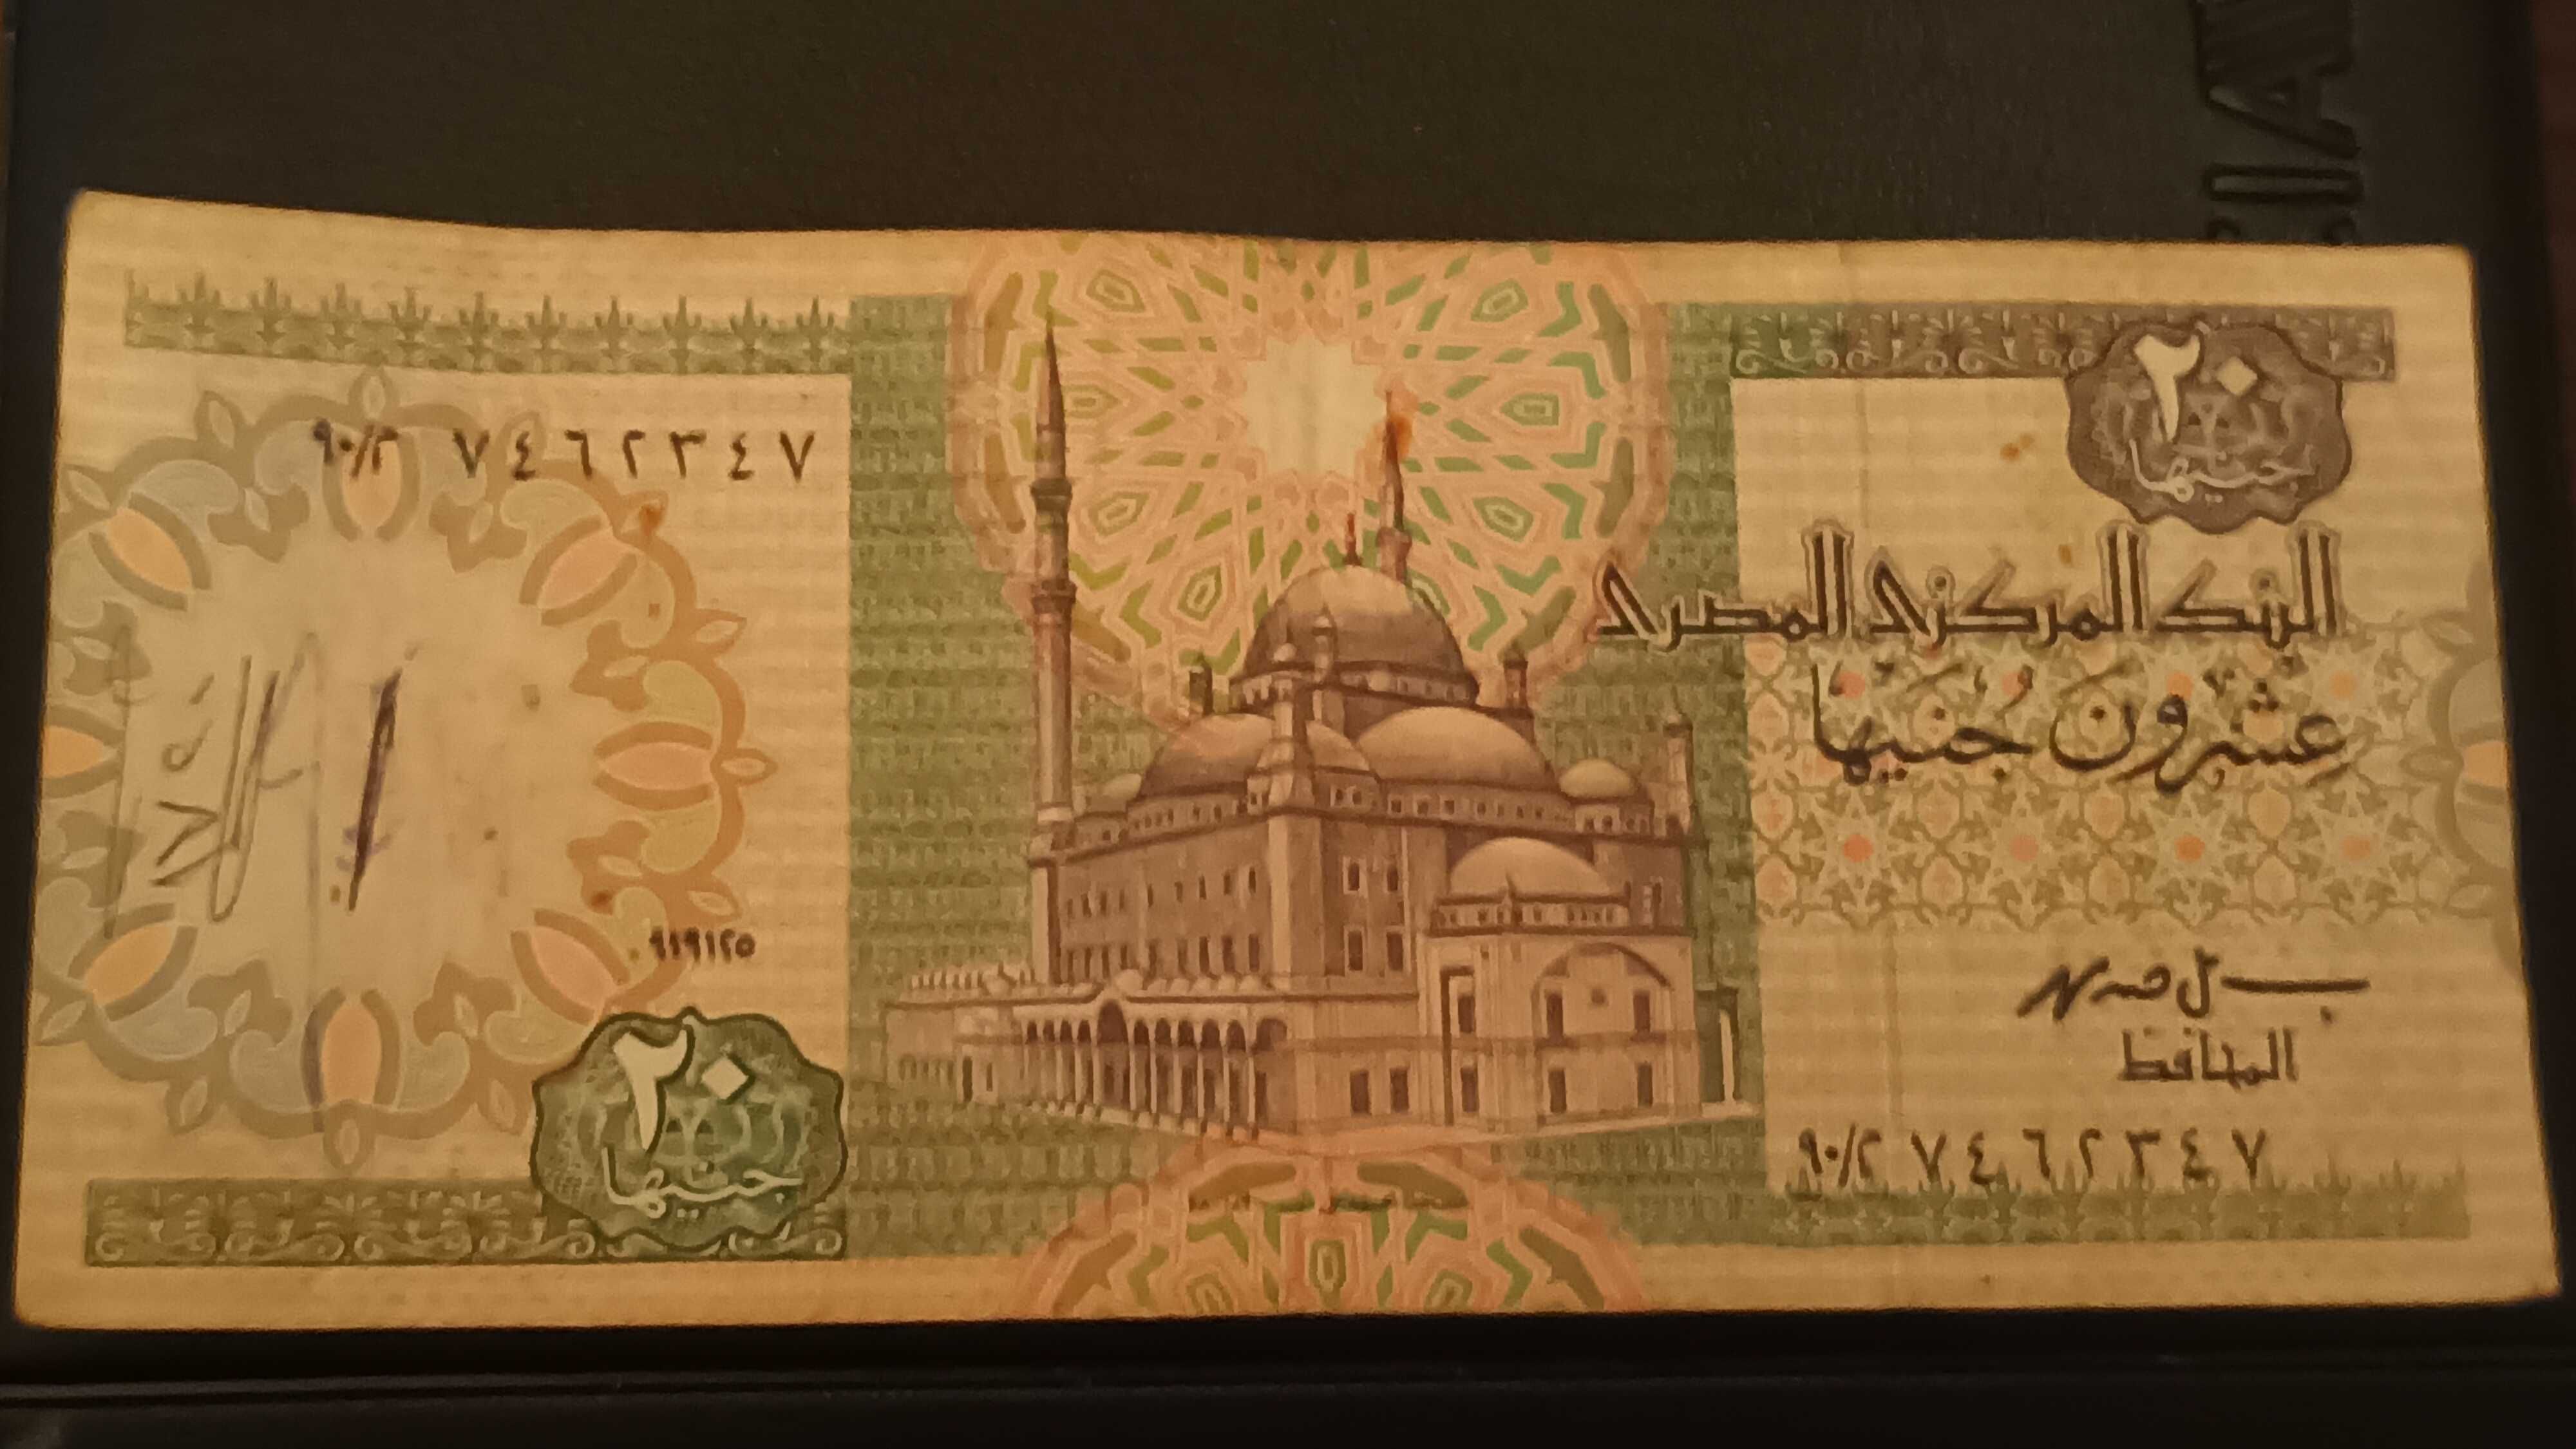 Banknot, 20 Pounds,Funt Egipski Rzadki